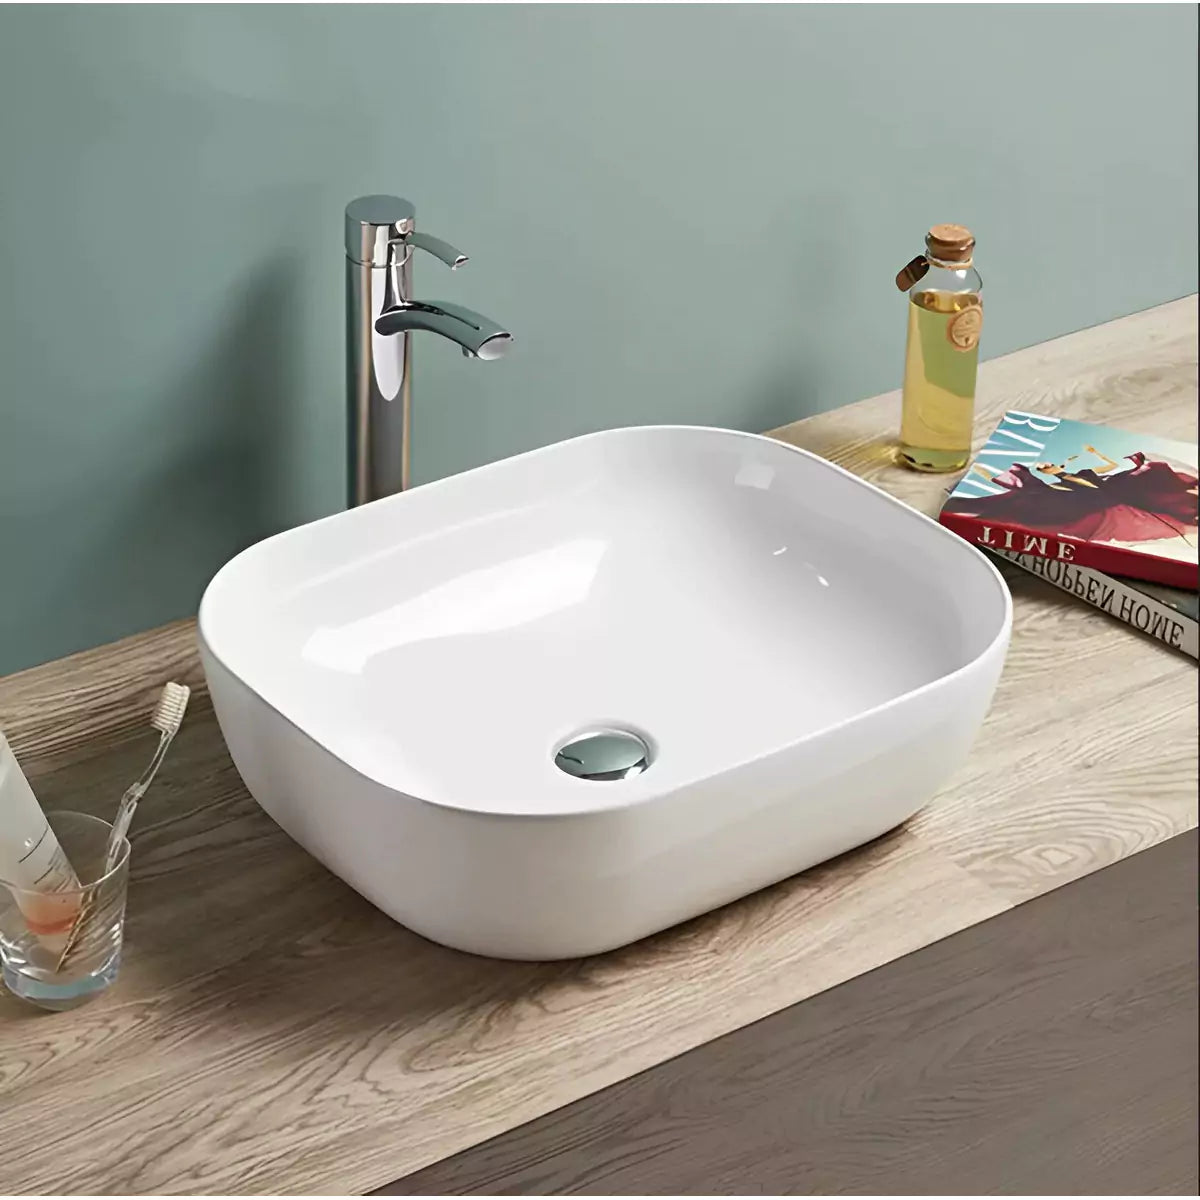 Fine Ceramic Basin Ultra Slim 505mm: Sleek and Elegant Basin Design-Gloss White-PA4939